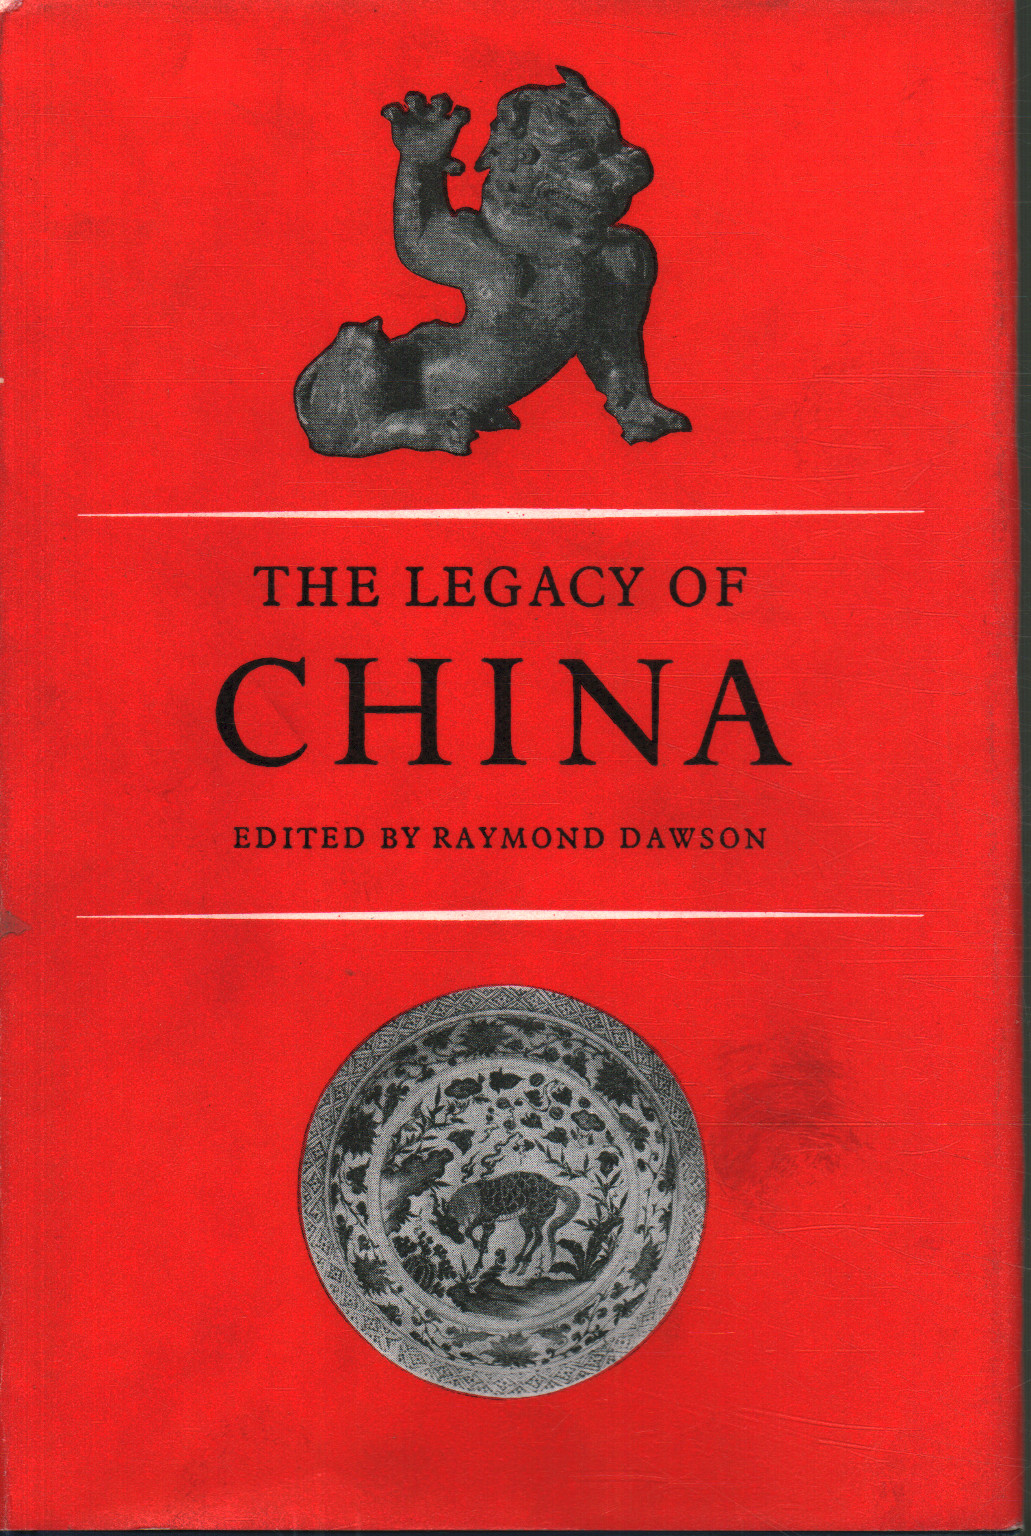 The legacy of China, Raymond Dawson